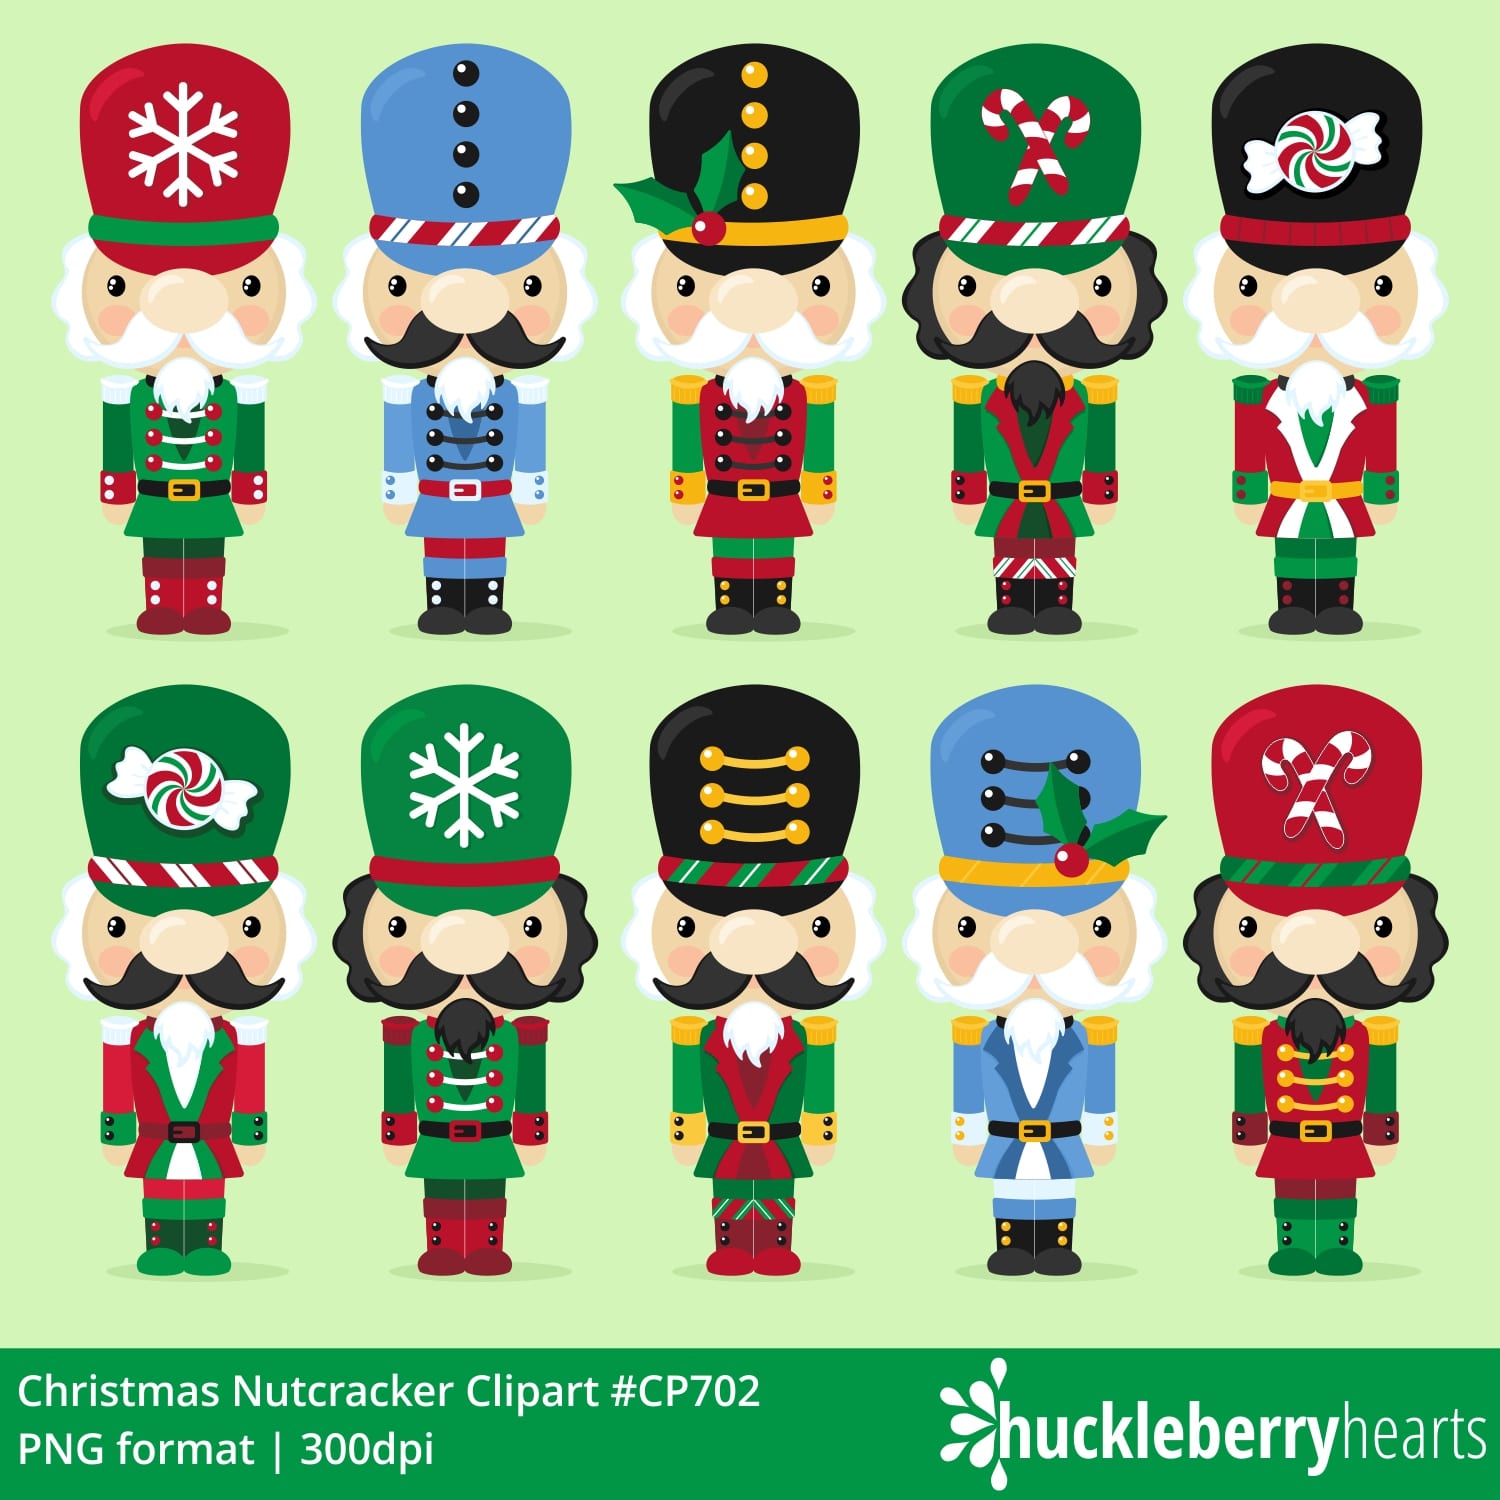 Assorted Christmas Nutcracker Cliparts